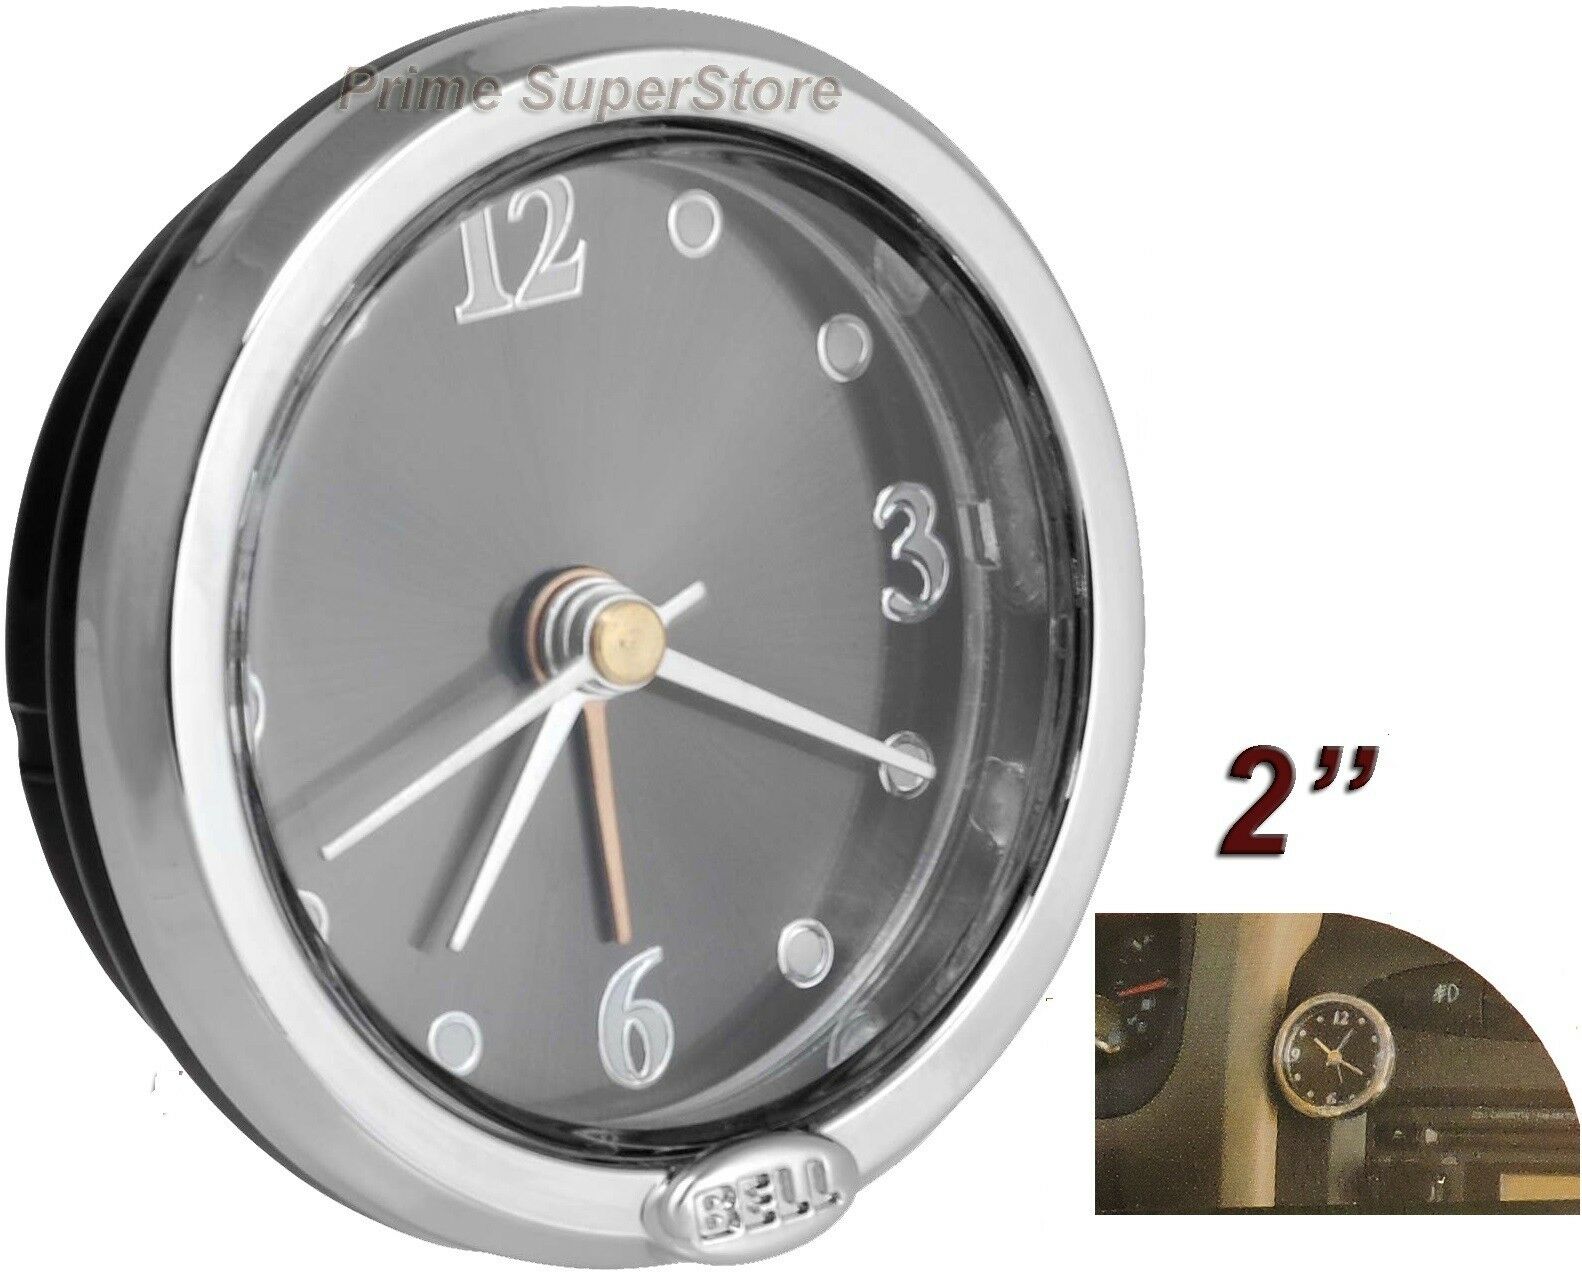 1 Black/silver Analog Alarm Clock Round Display Car/rv/truck Interior Dash Mount